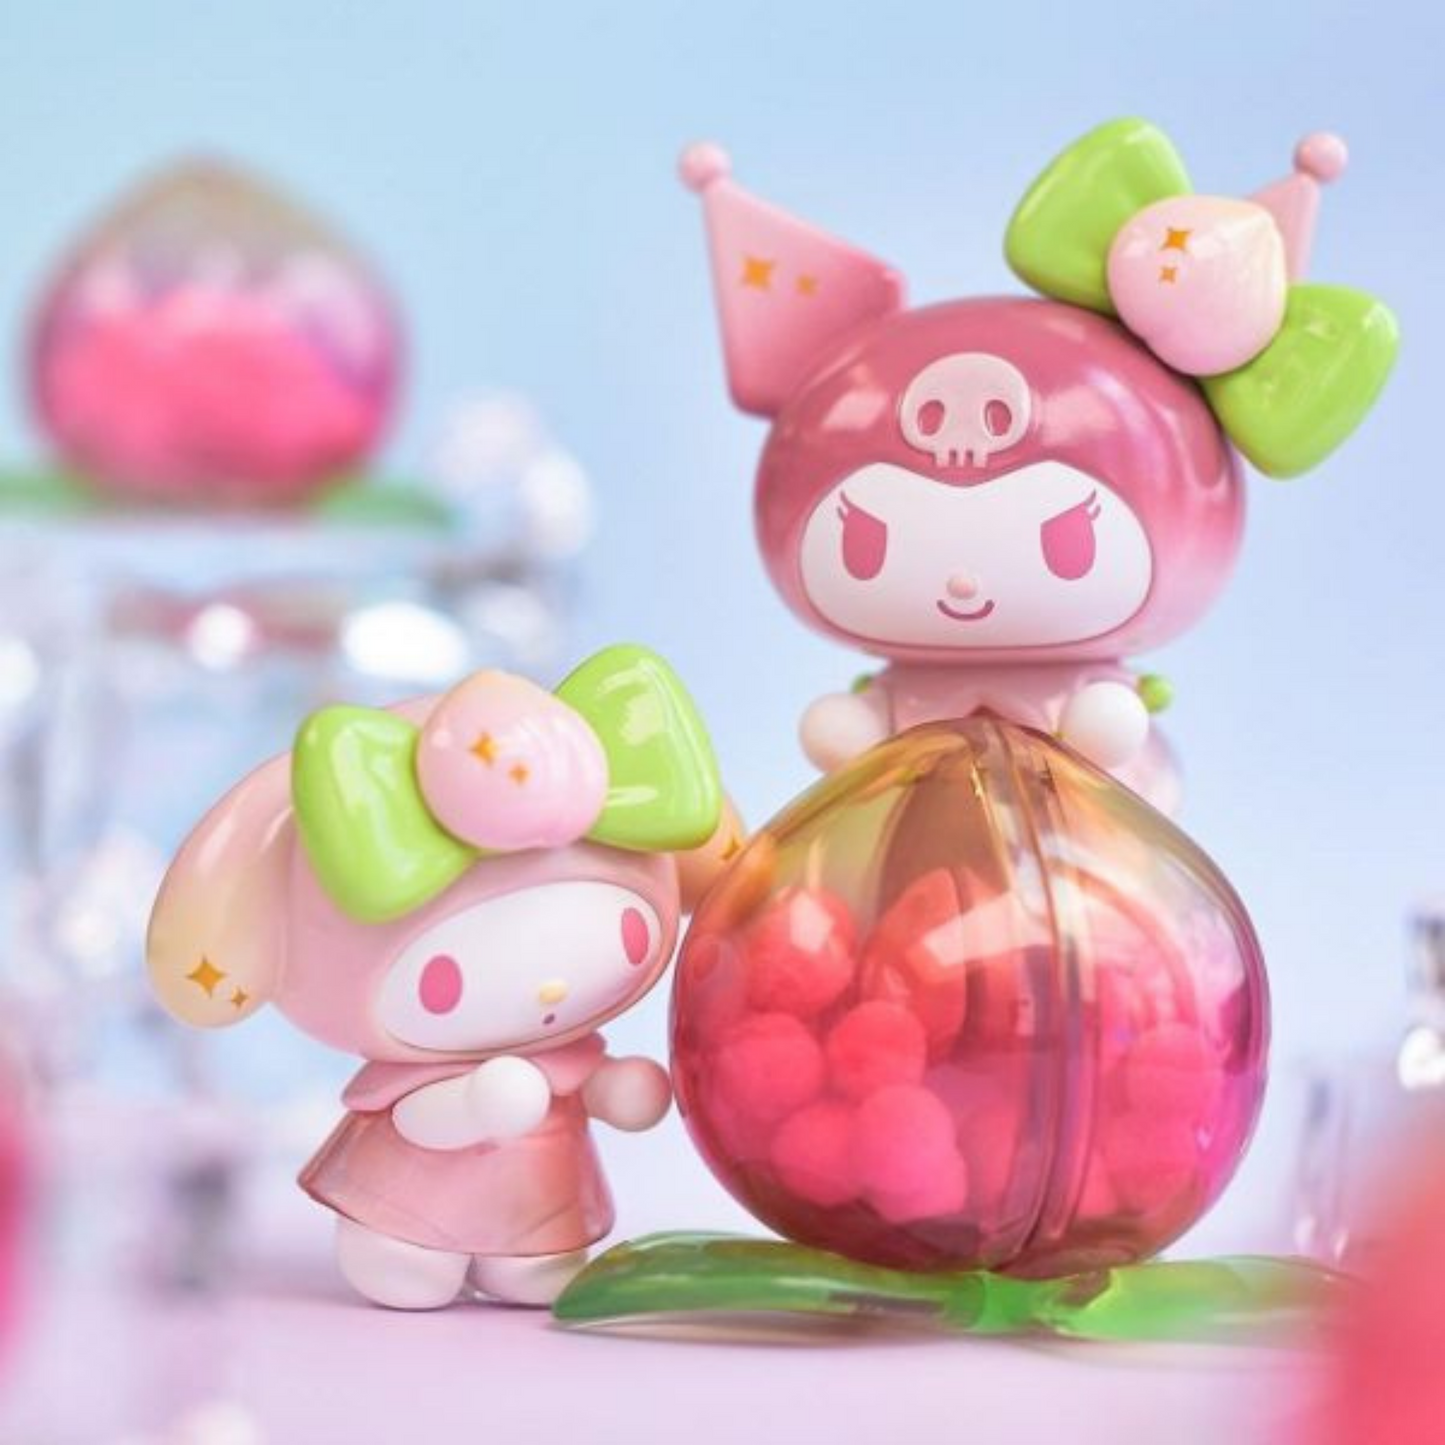 【NEW】Top Toy Sanrio Characters: Vitality Peach Paradise Series Blind Box Random Style